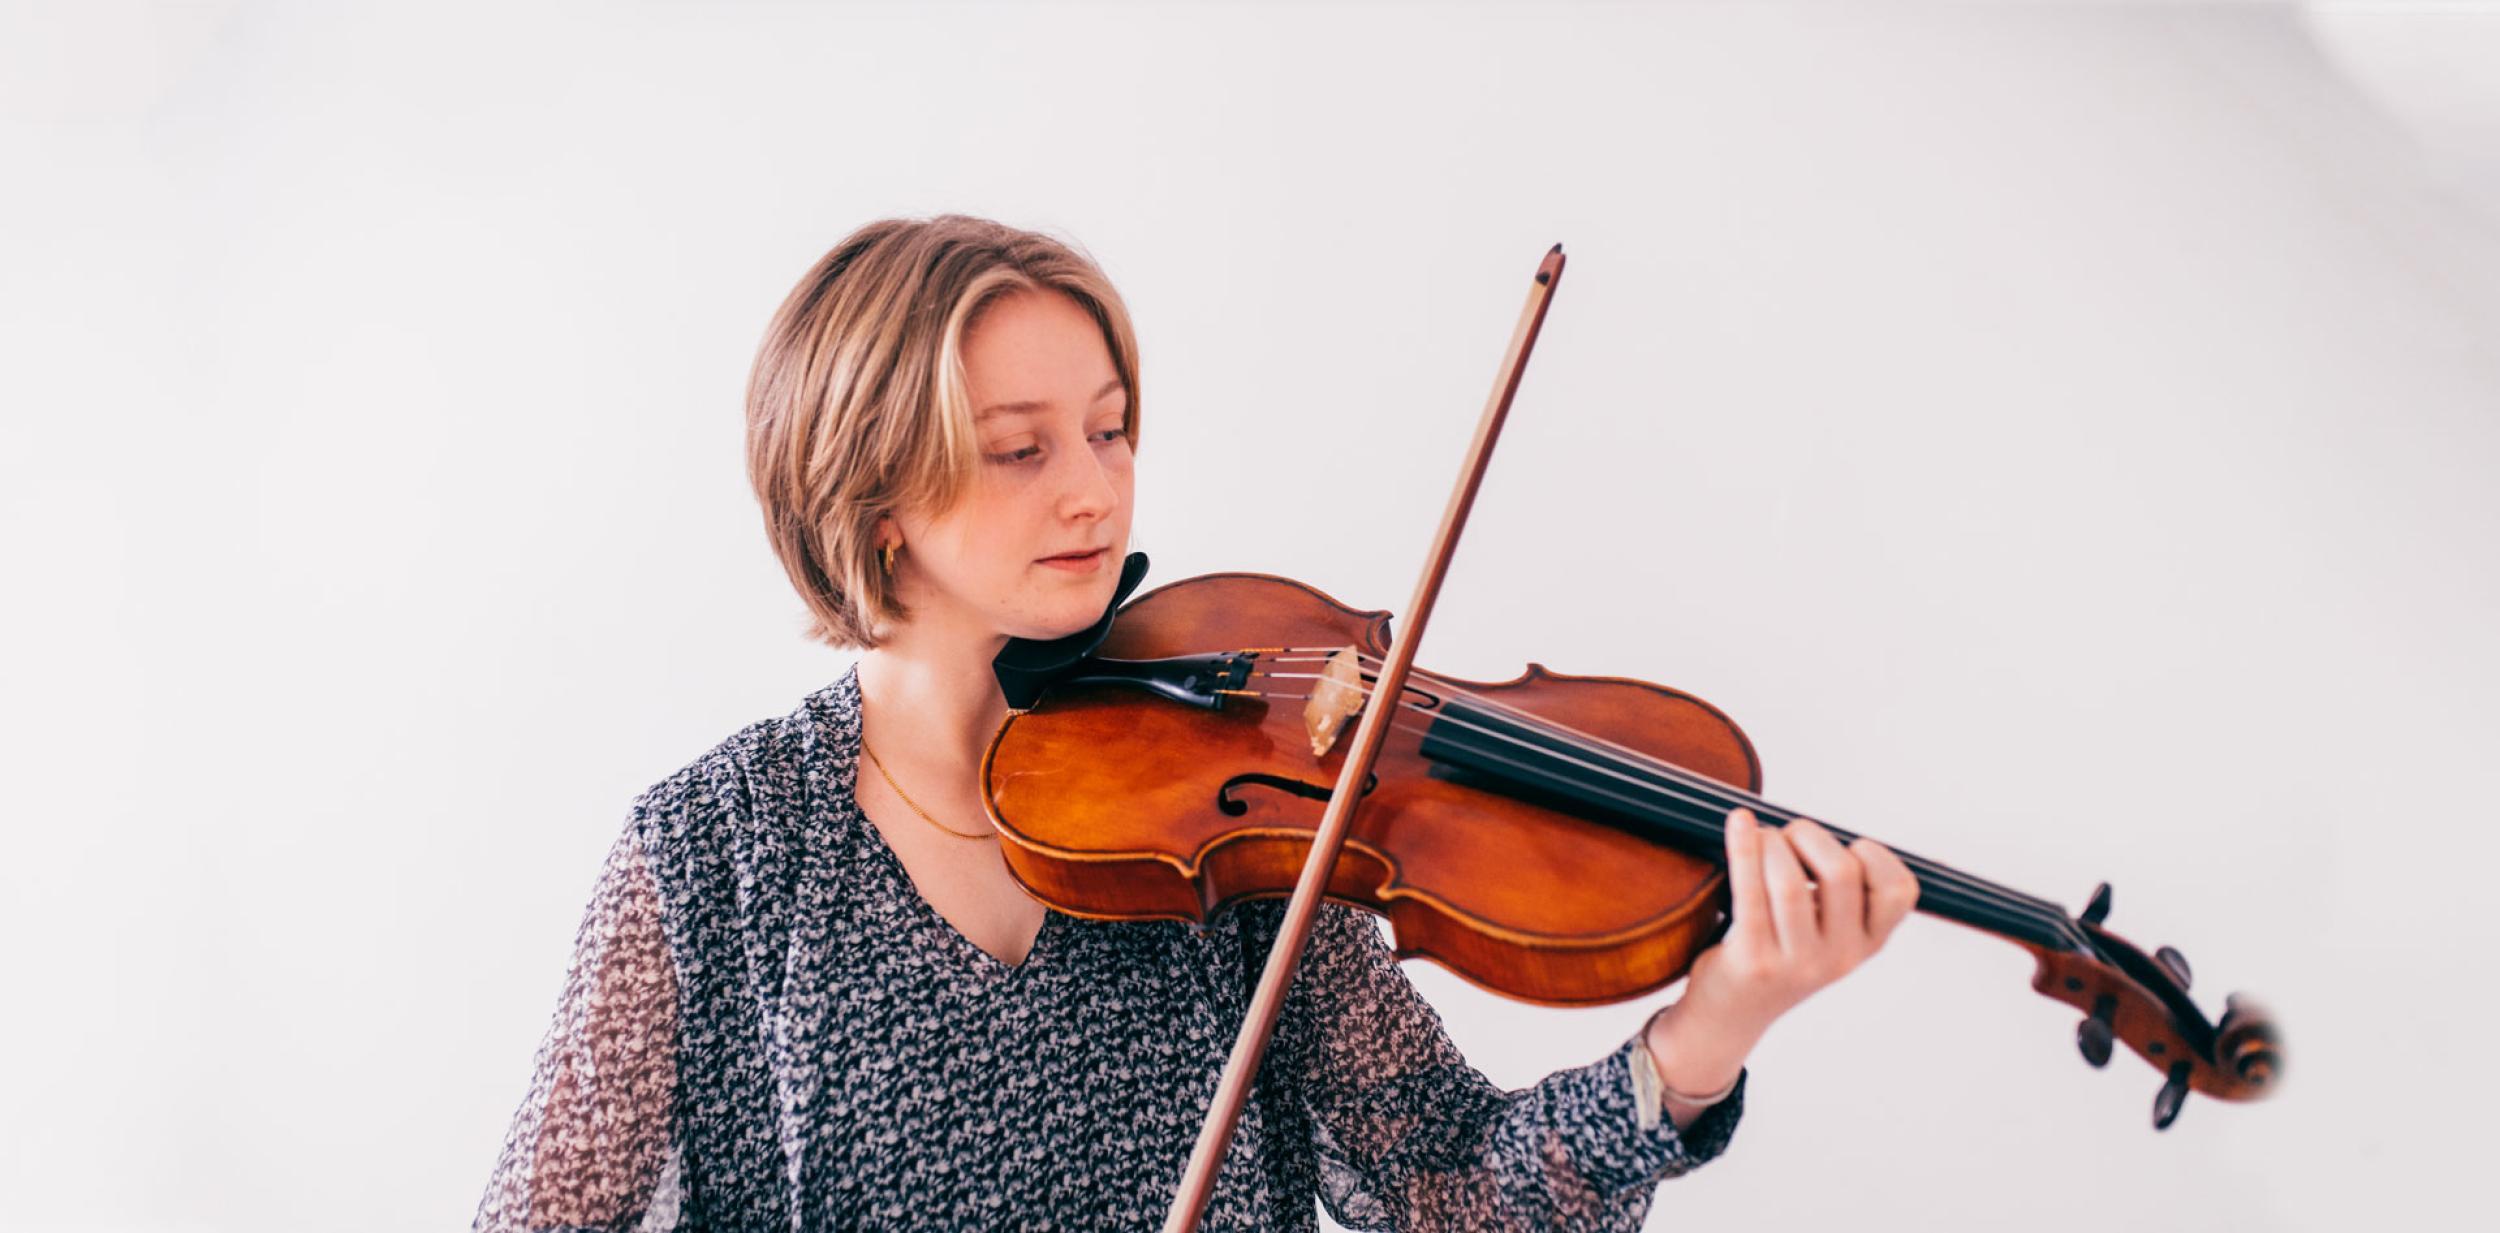 Isobel Adams playing the violin